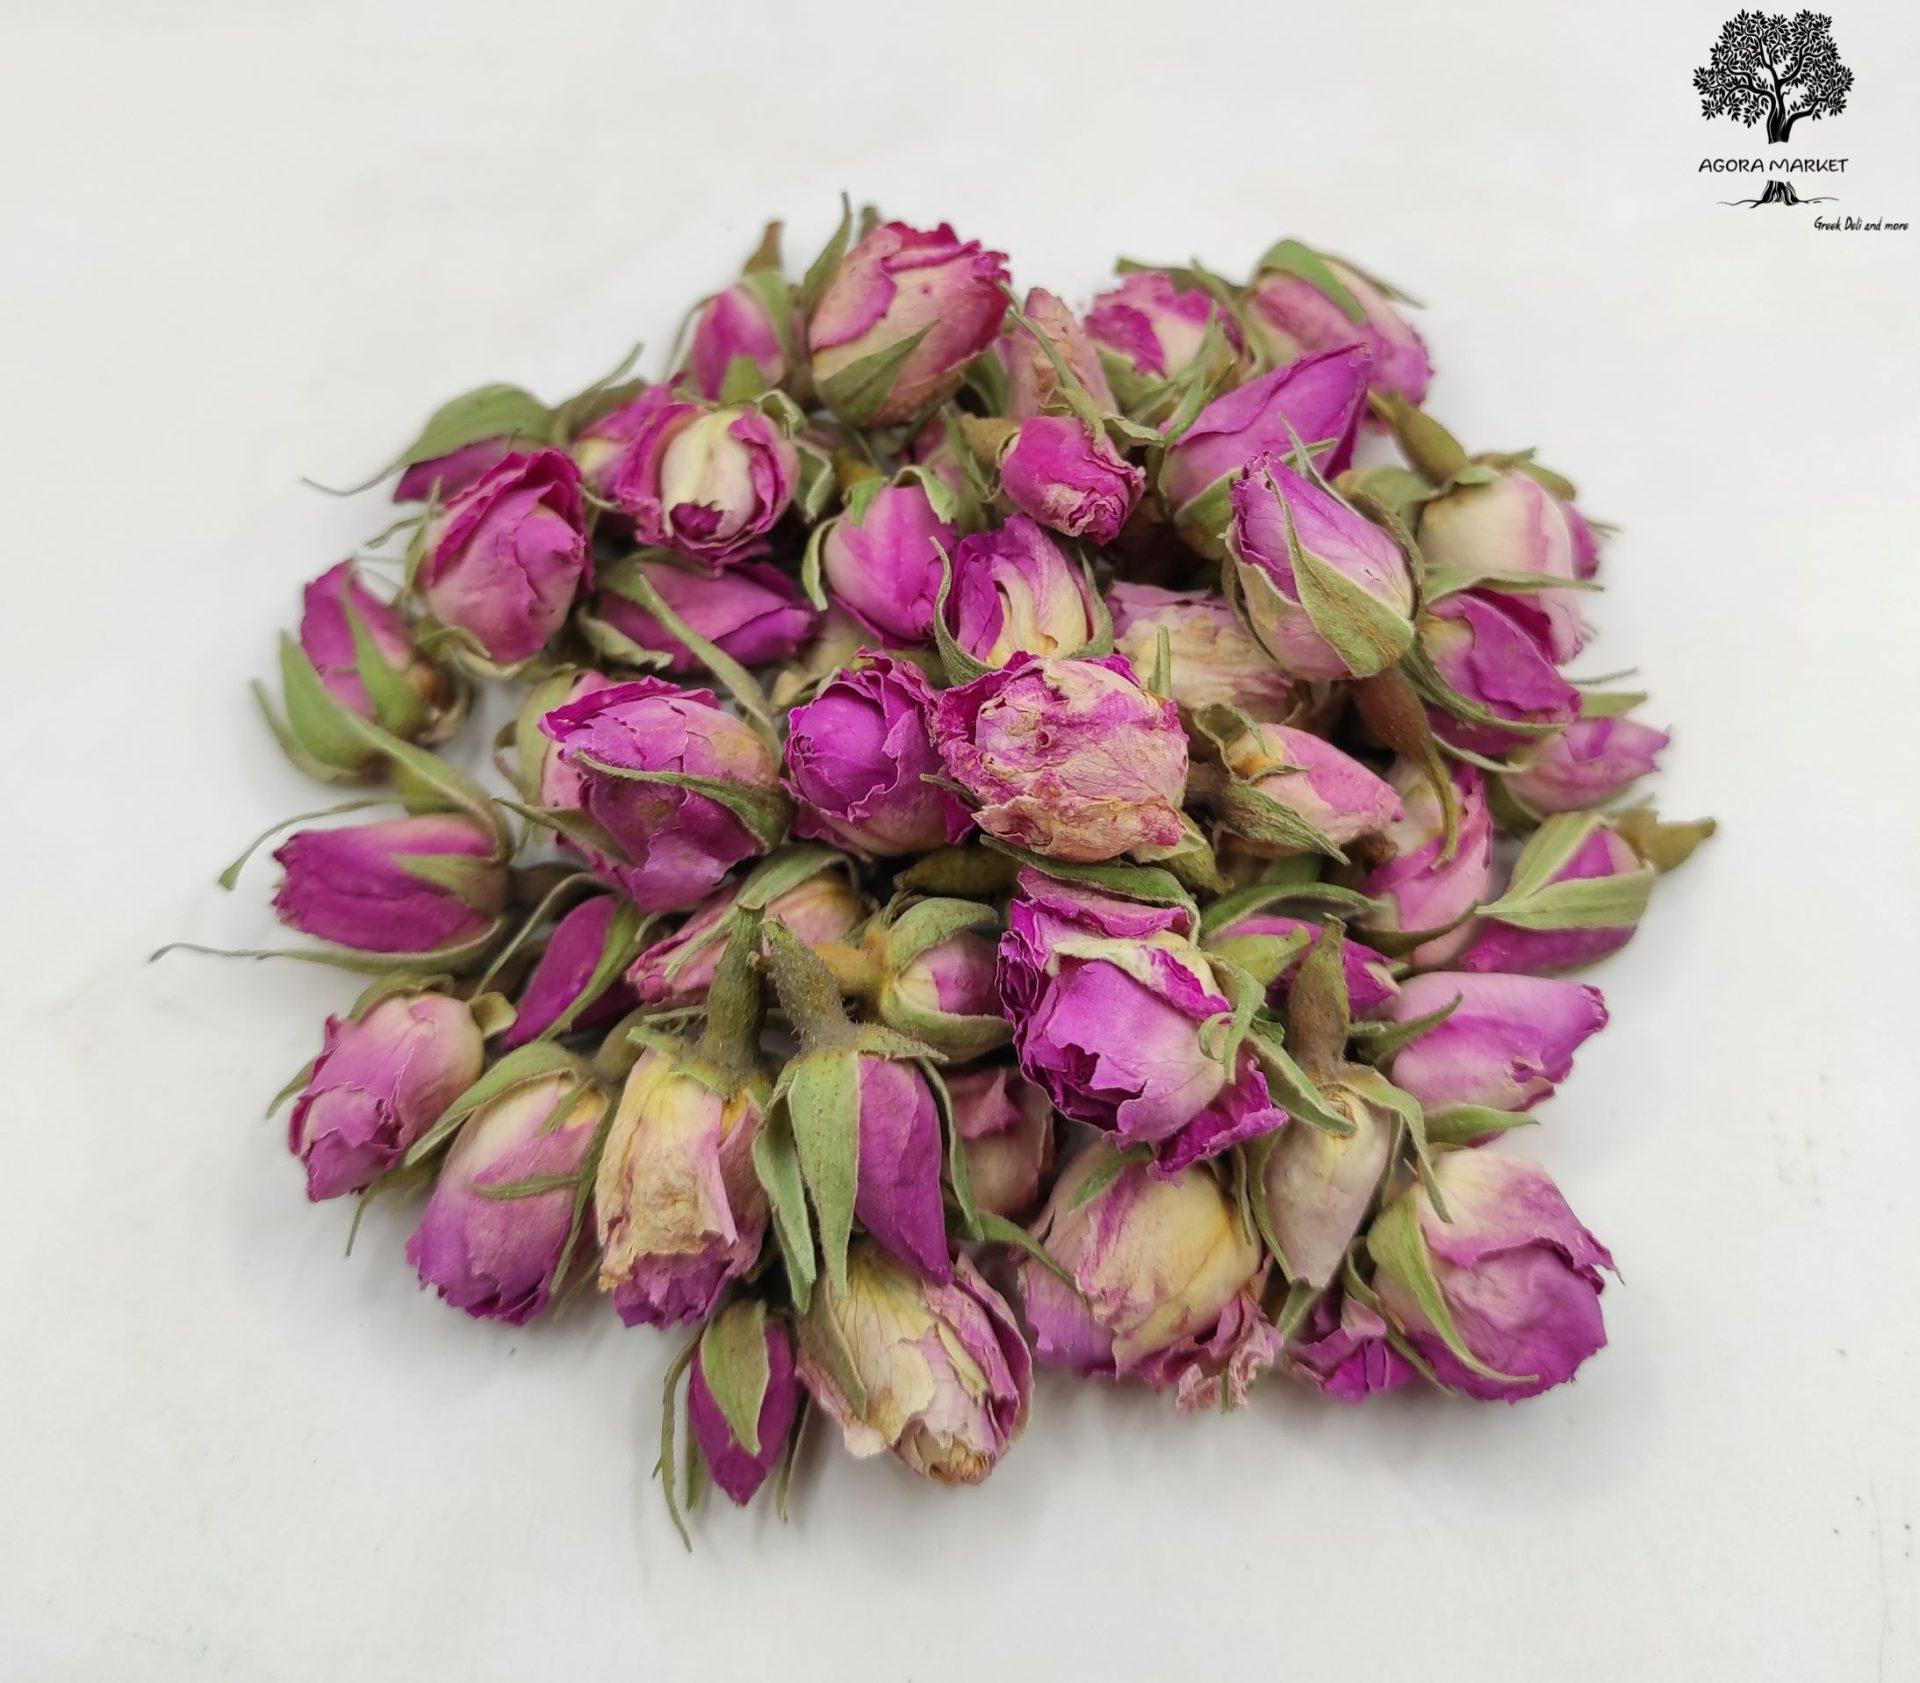 Rose Buds Whole - 4 oz - Organic | Mountain Rose Herbs